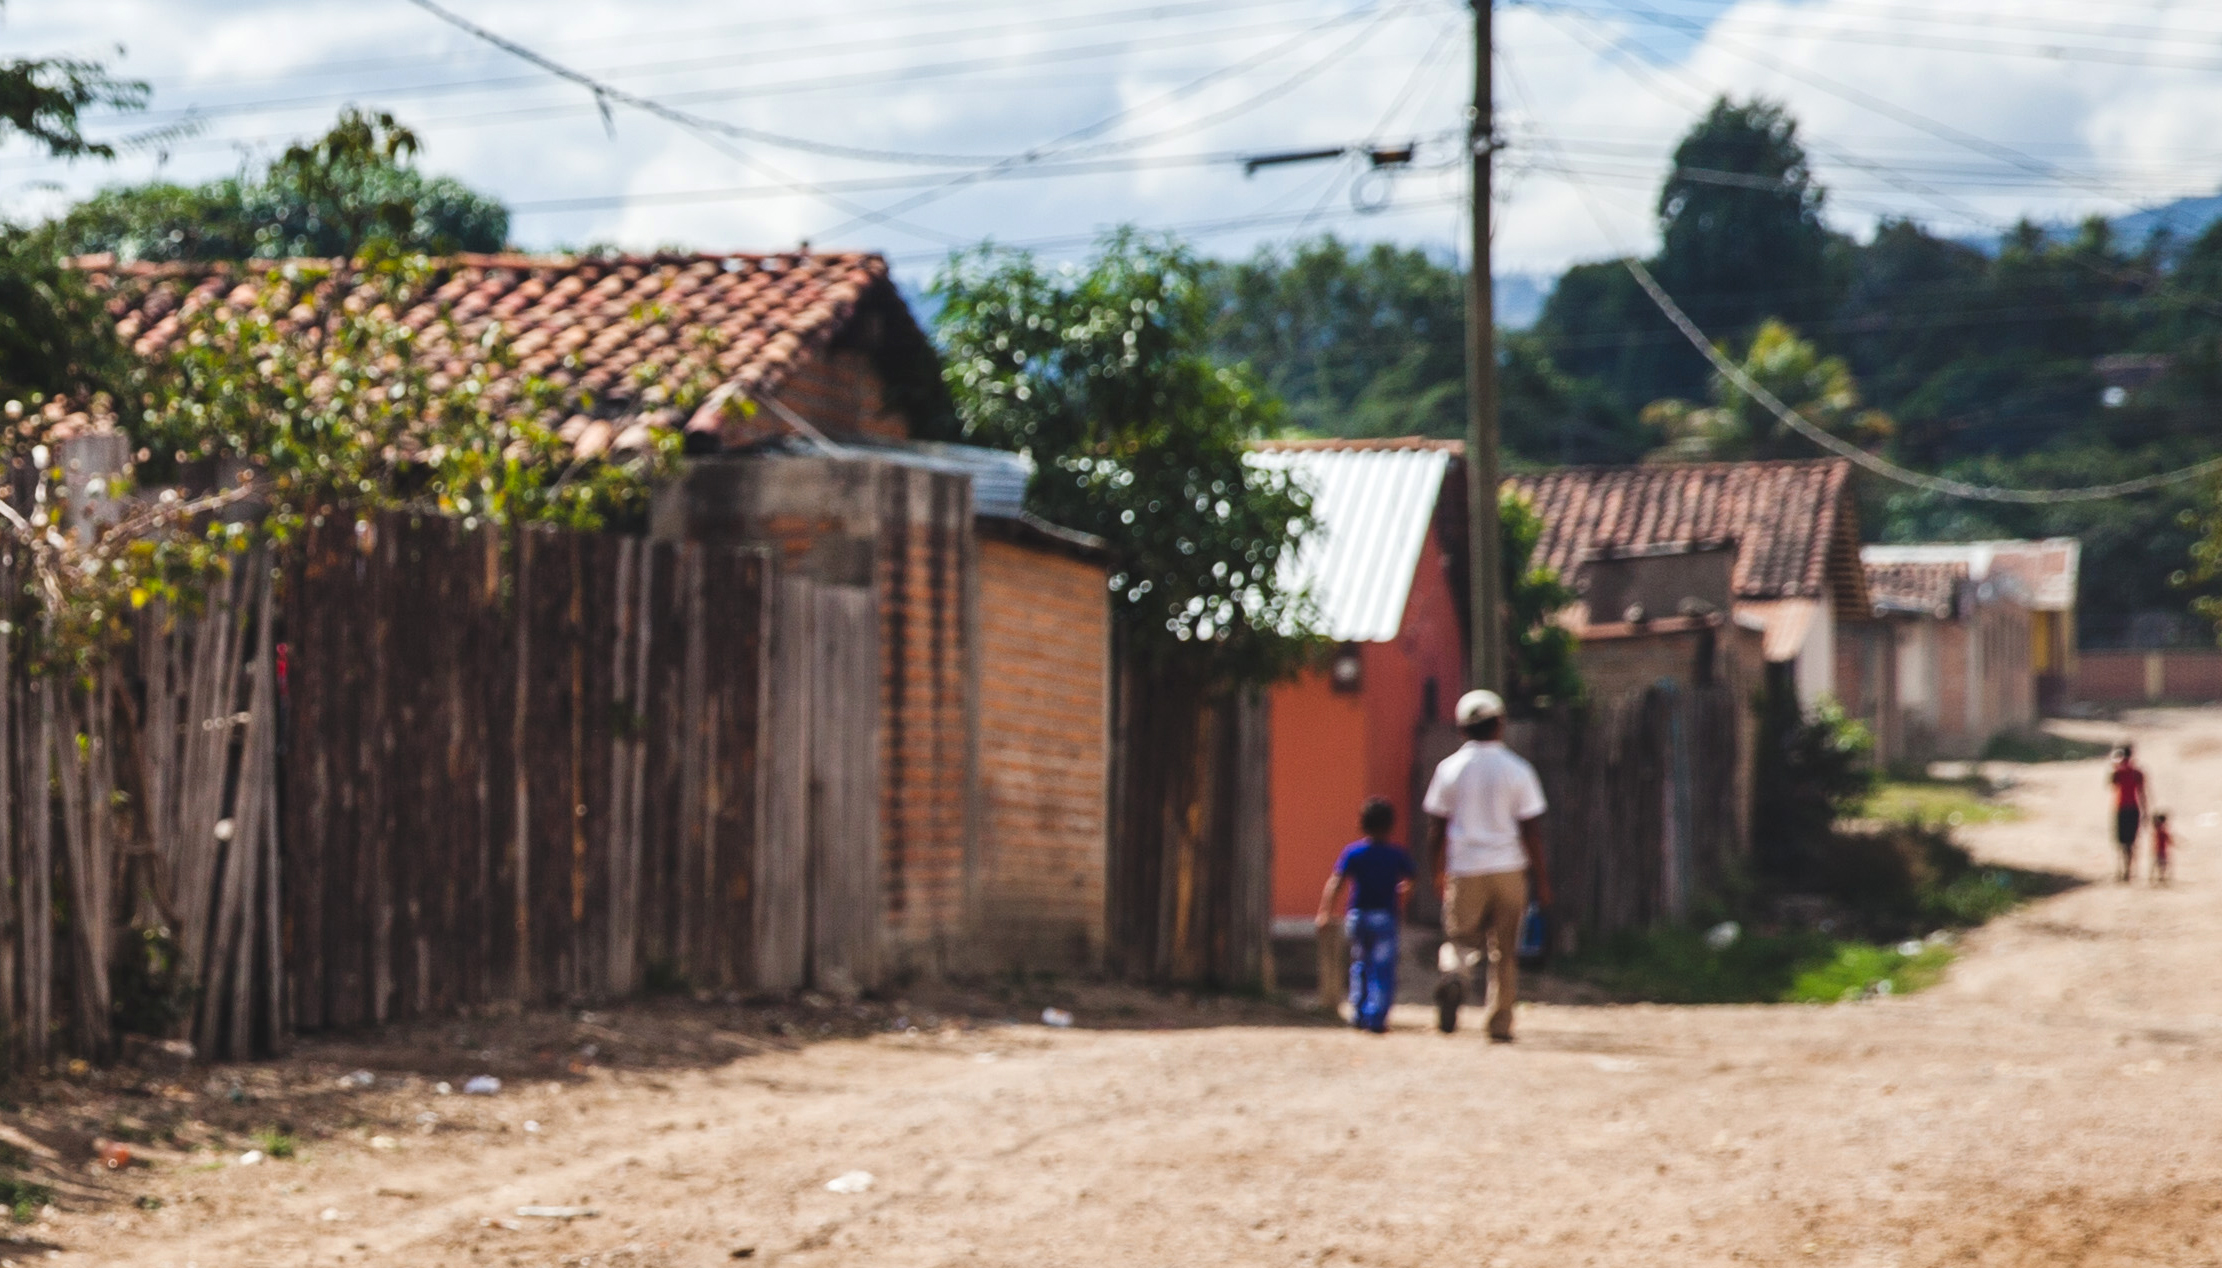 Child Poverty in Latin America - Displaced Children